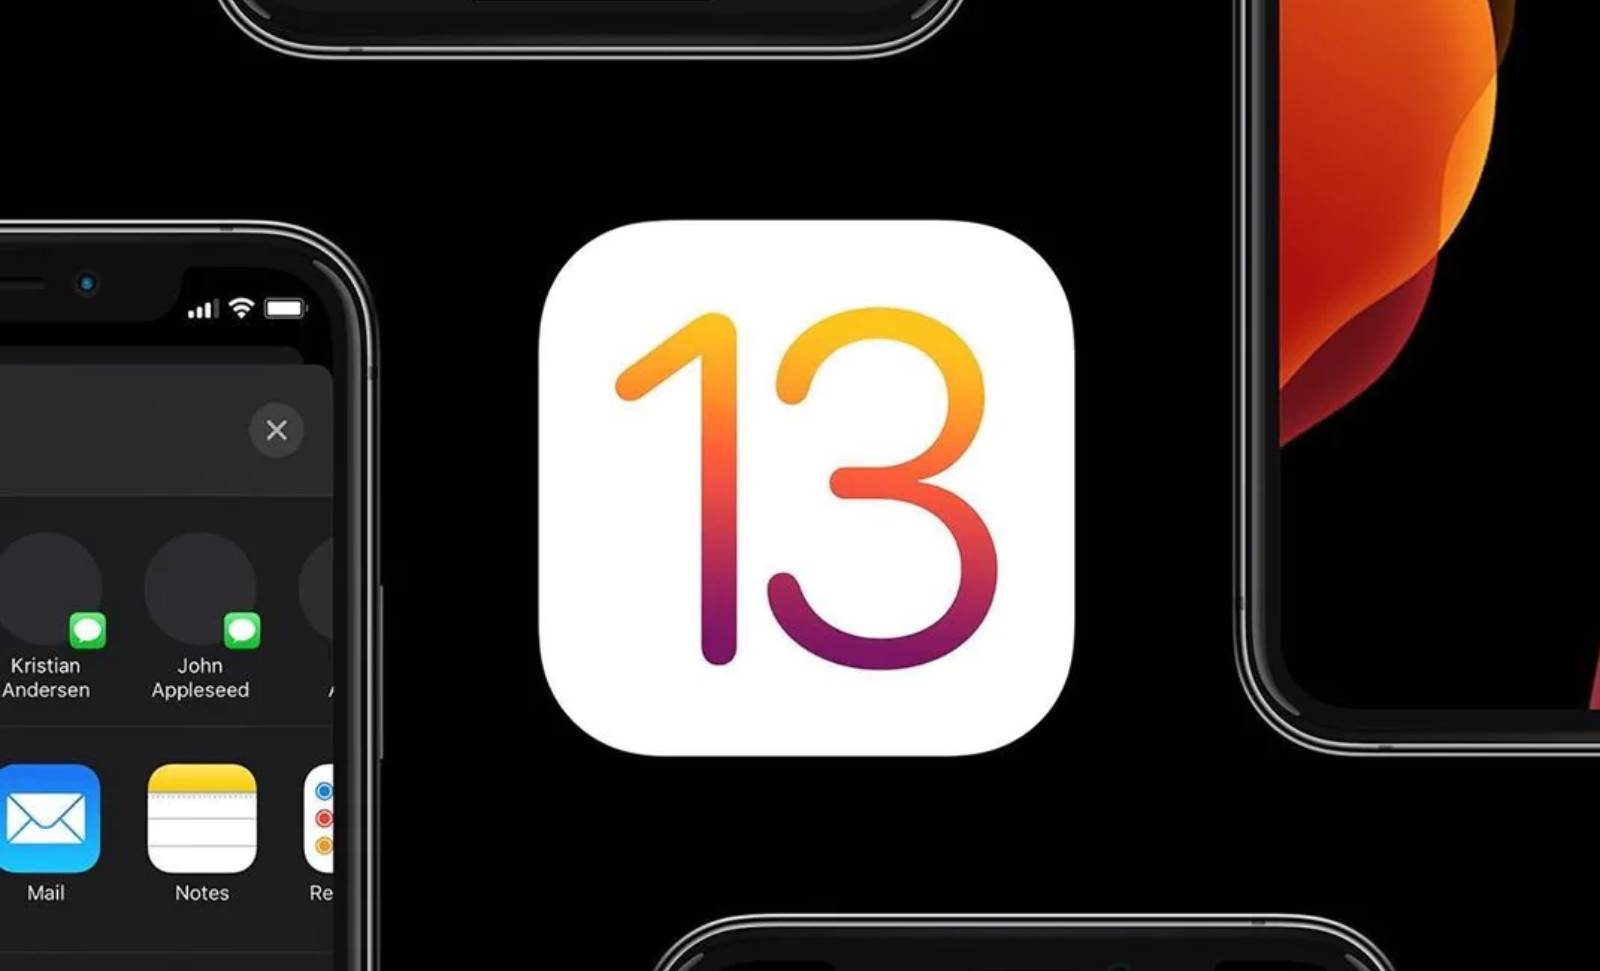 iOS 13.2 beta 4